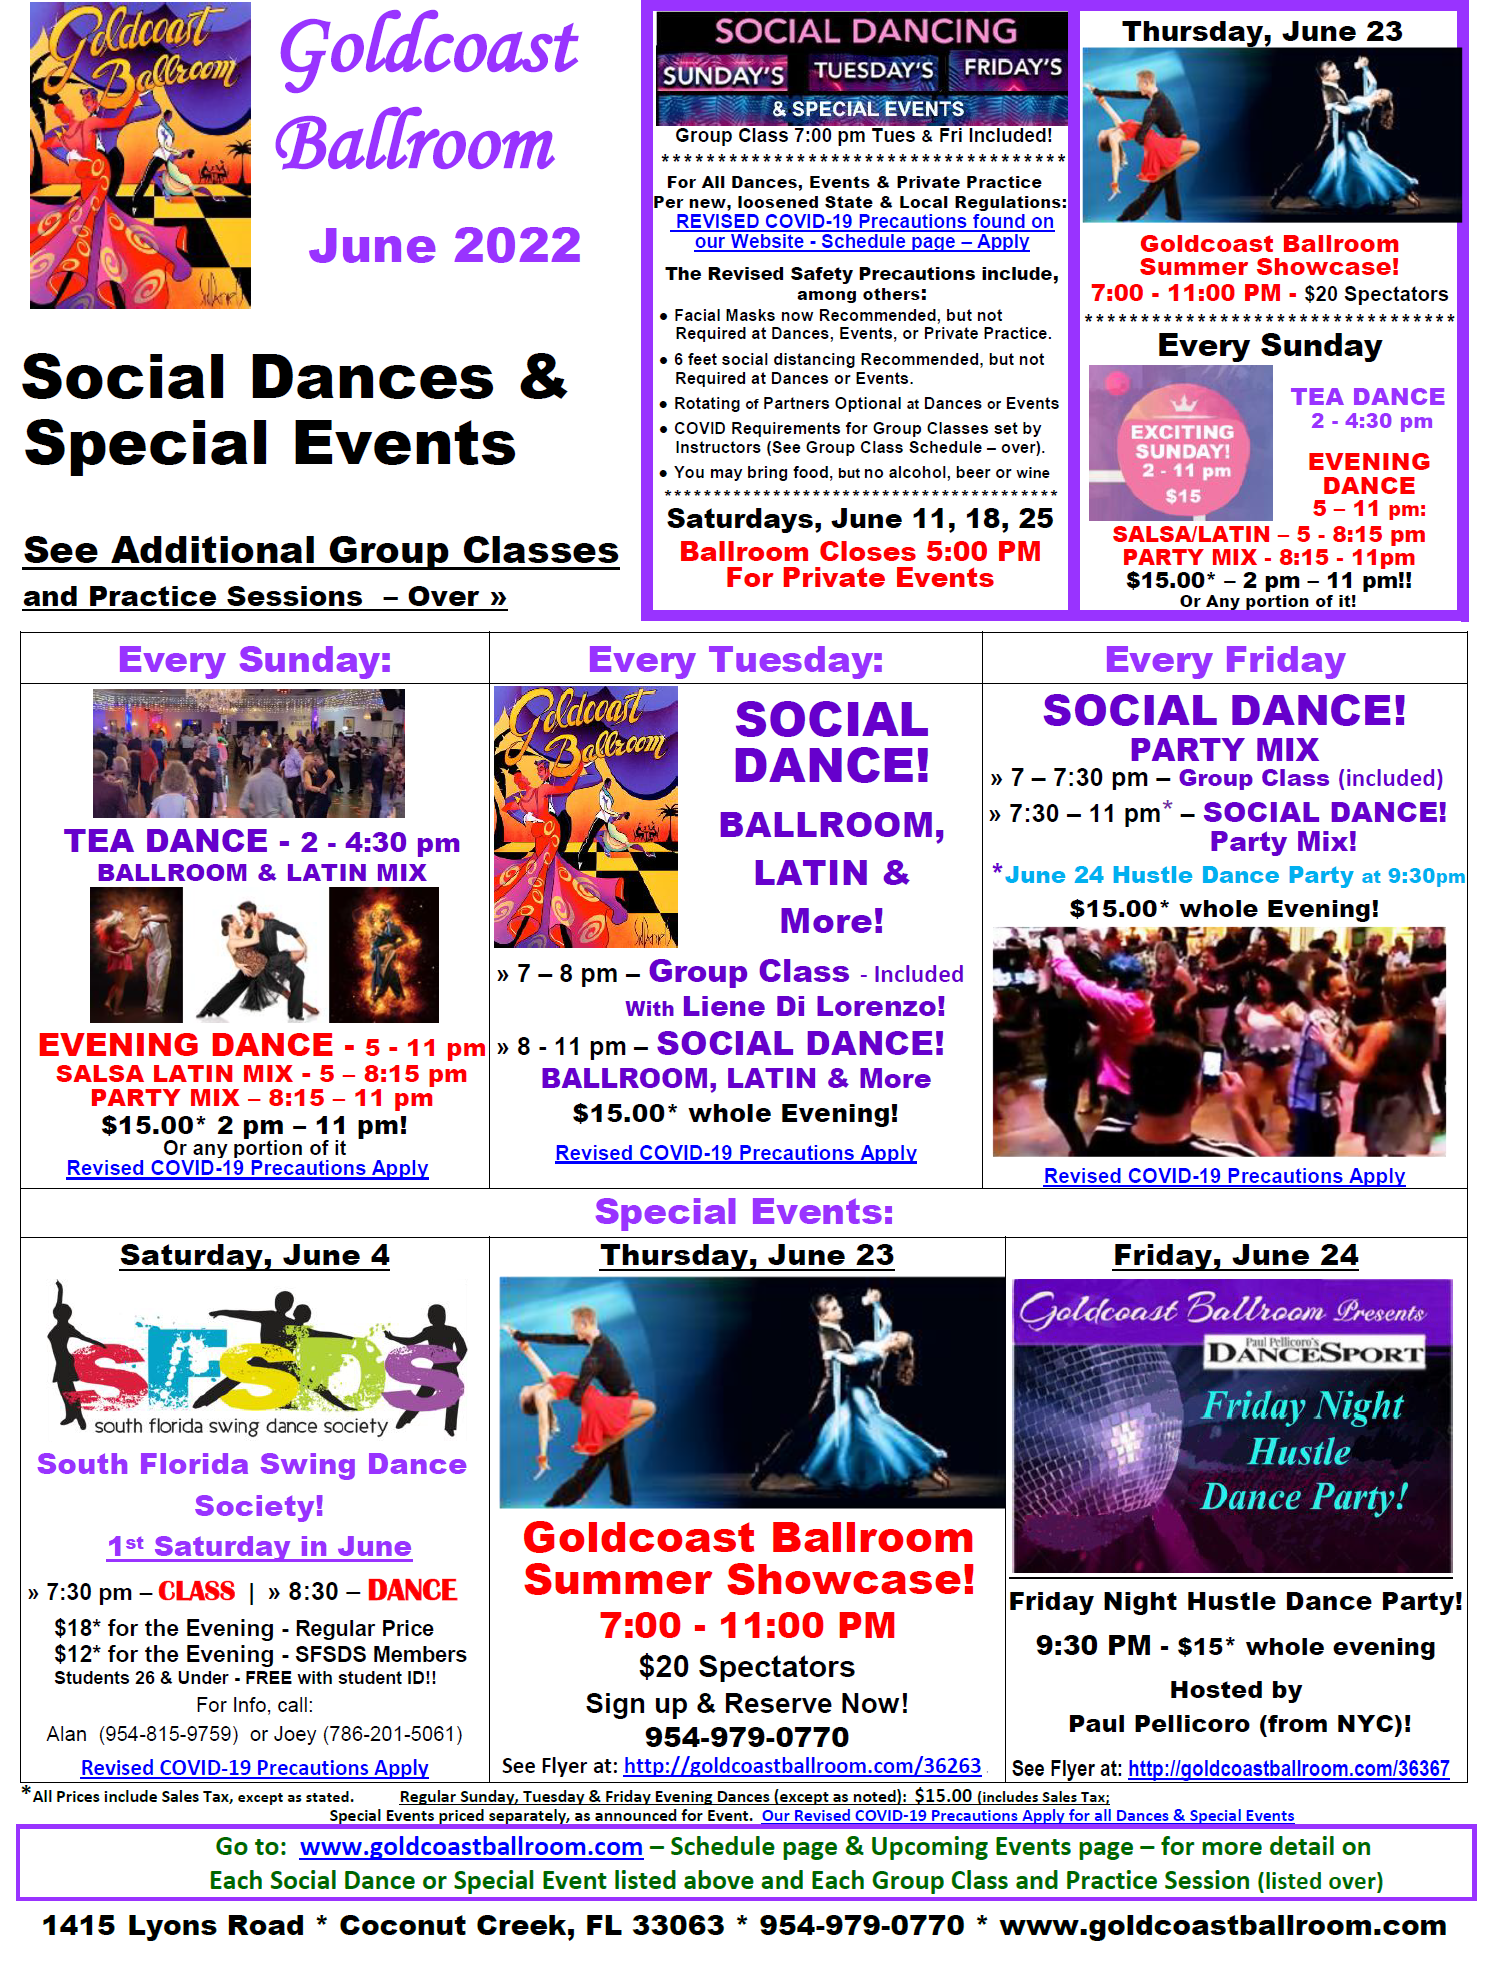 Goldcoast Ballroom June, 2022 Calendar - Social Dances & Special Events  - Click to view as PDF doc with clickable links